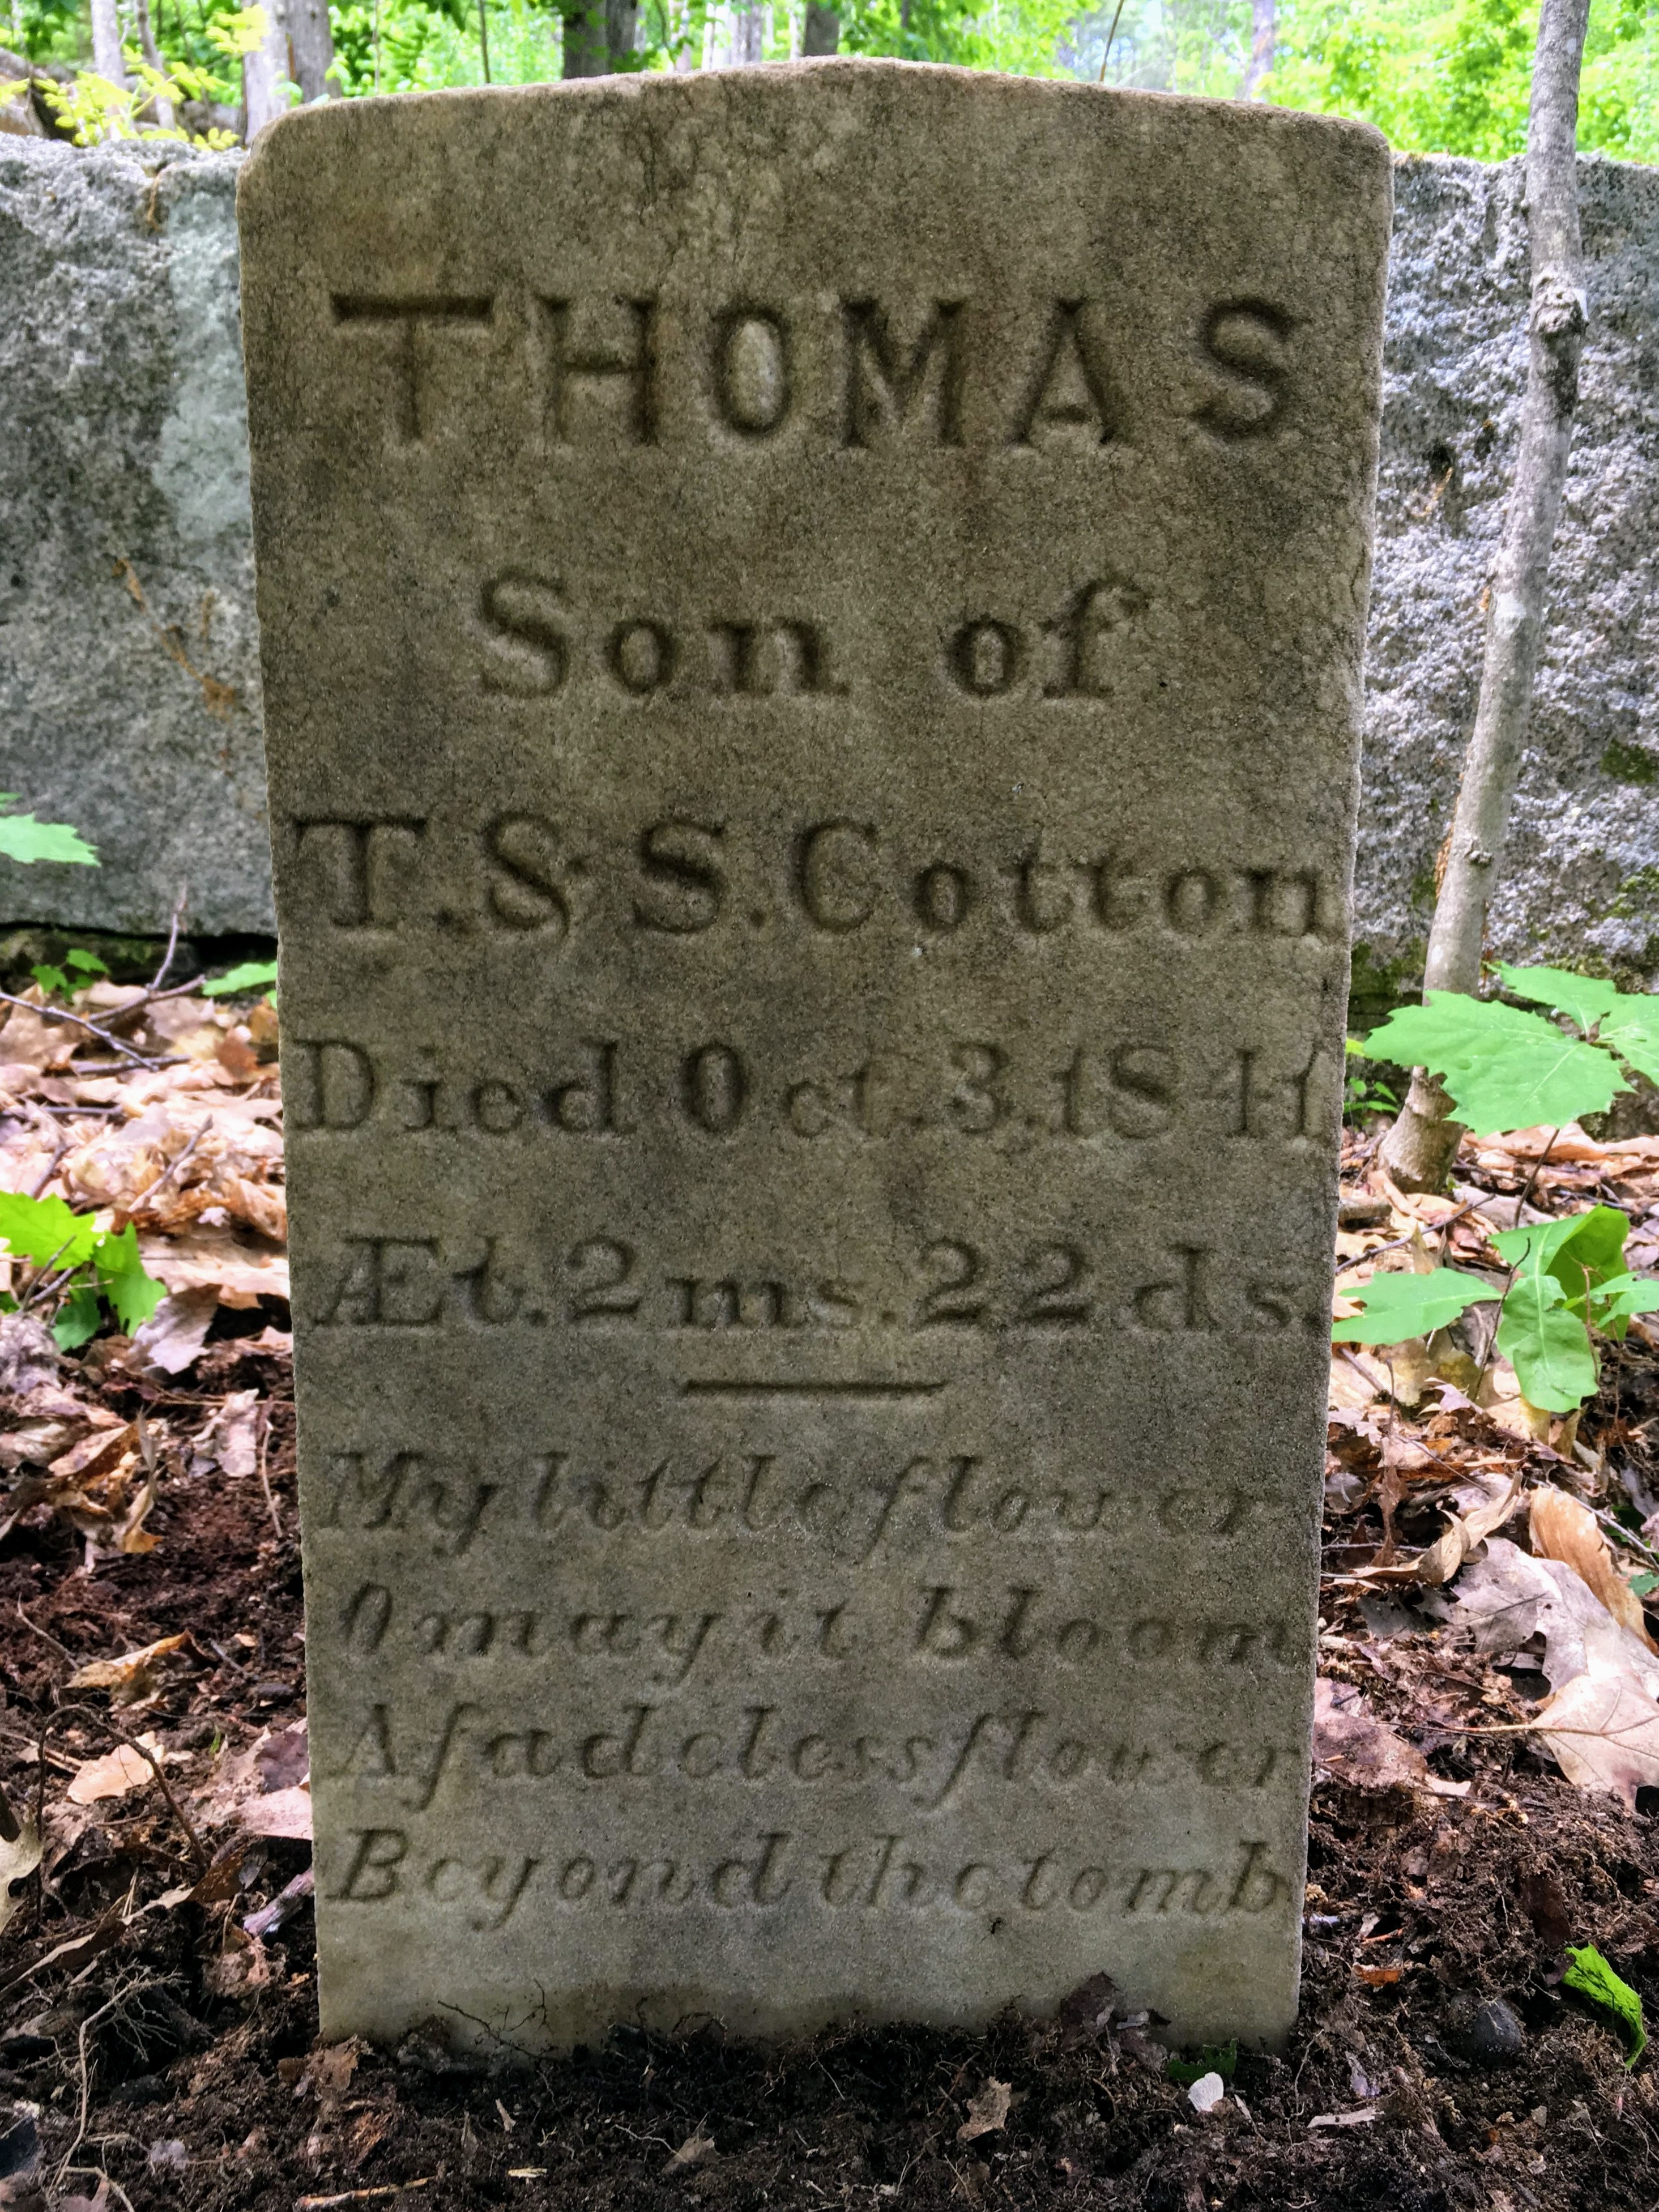 Cotton Cemetery (Thomas) - Brownfield Maine Cemeteries